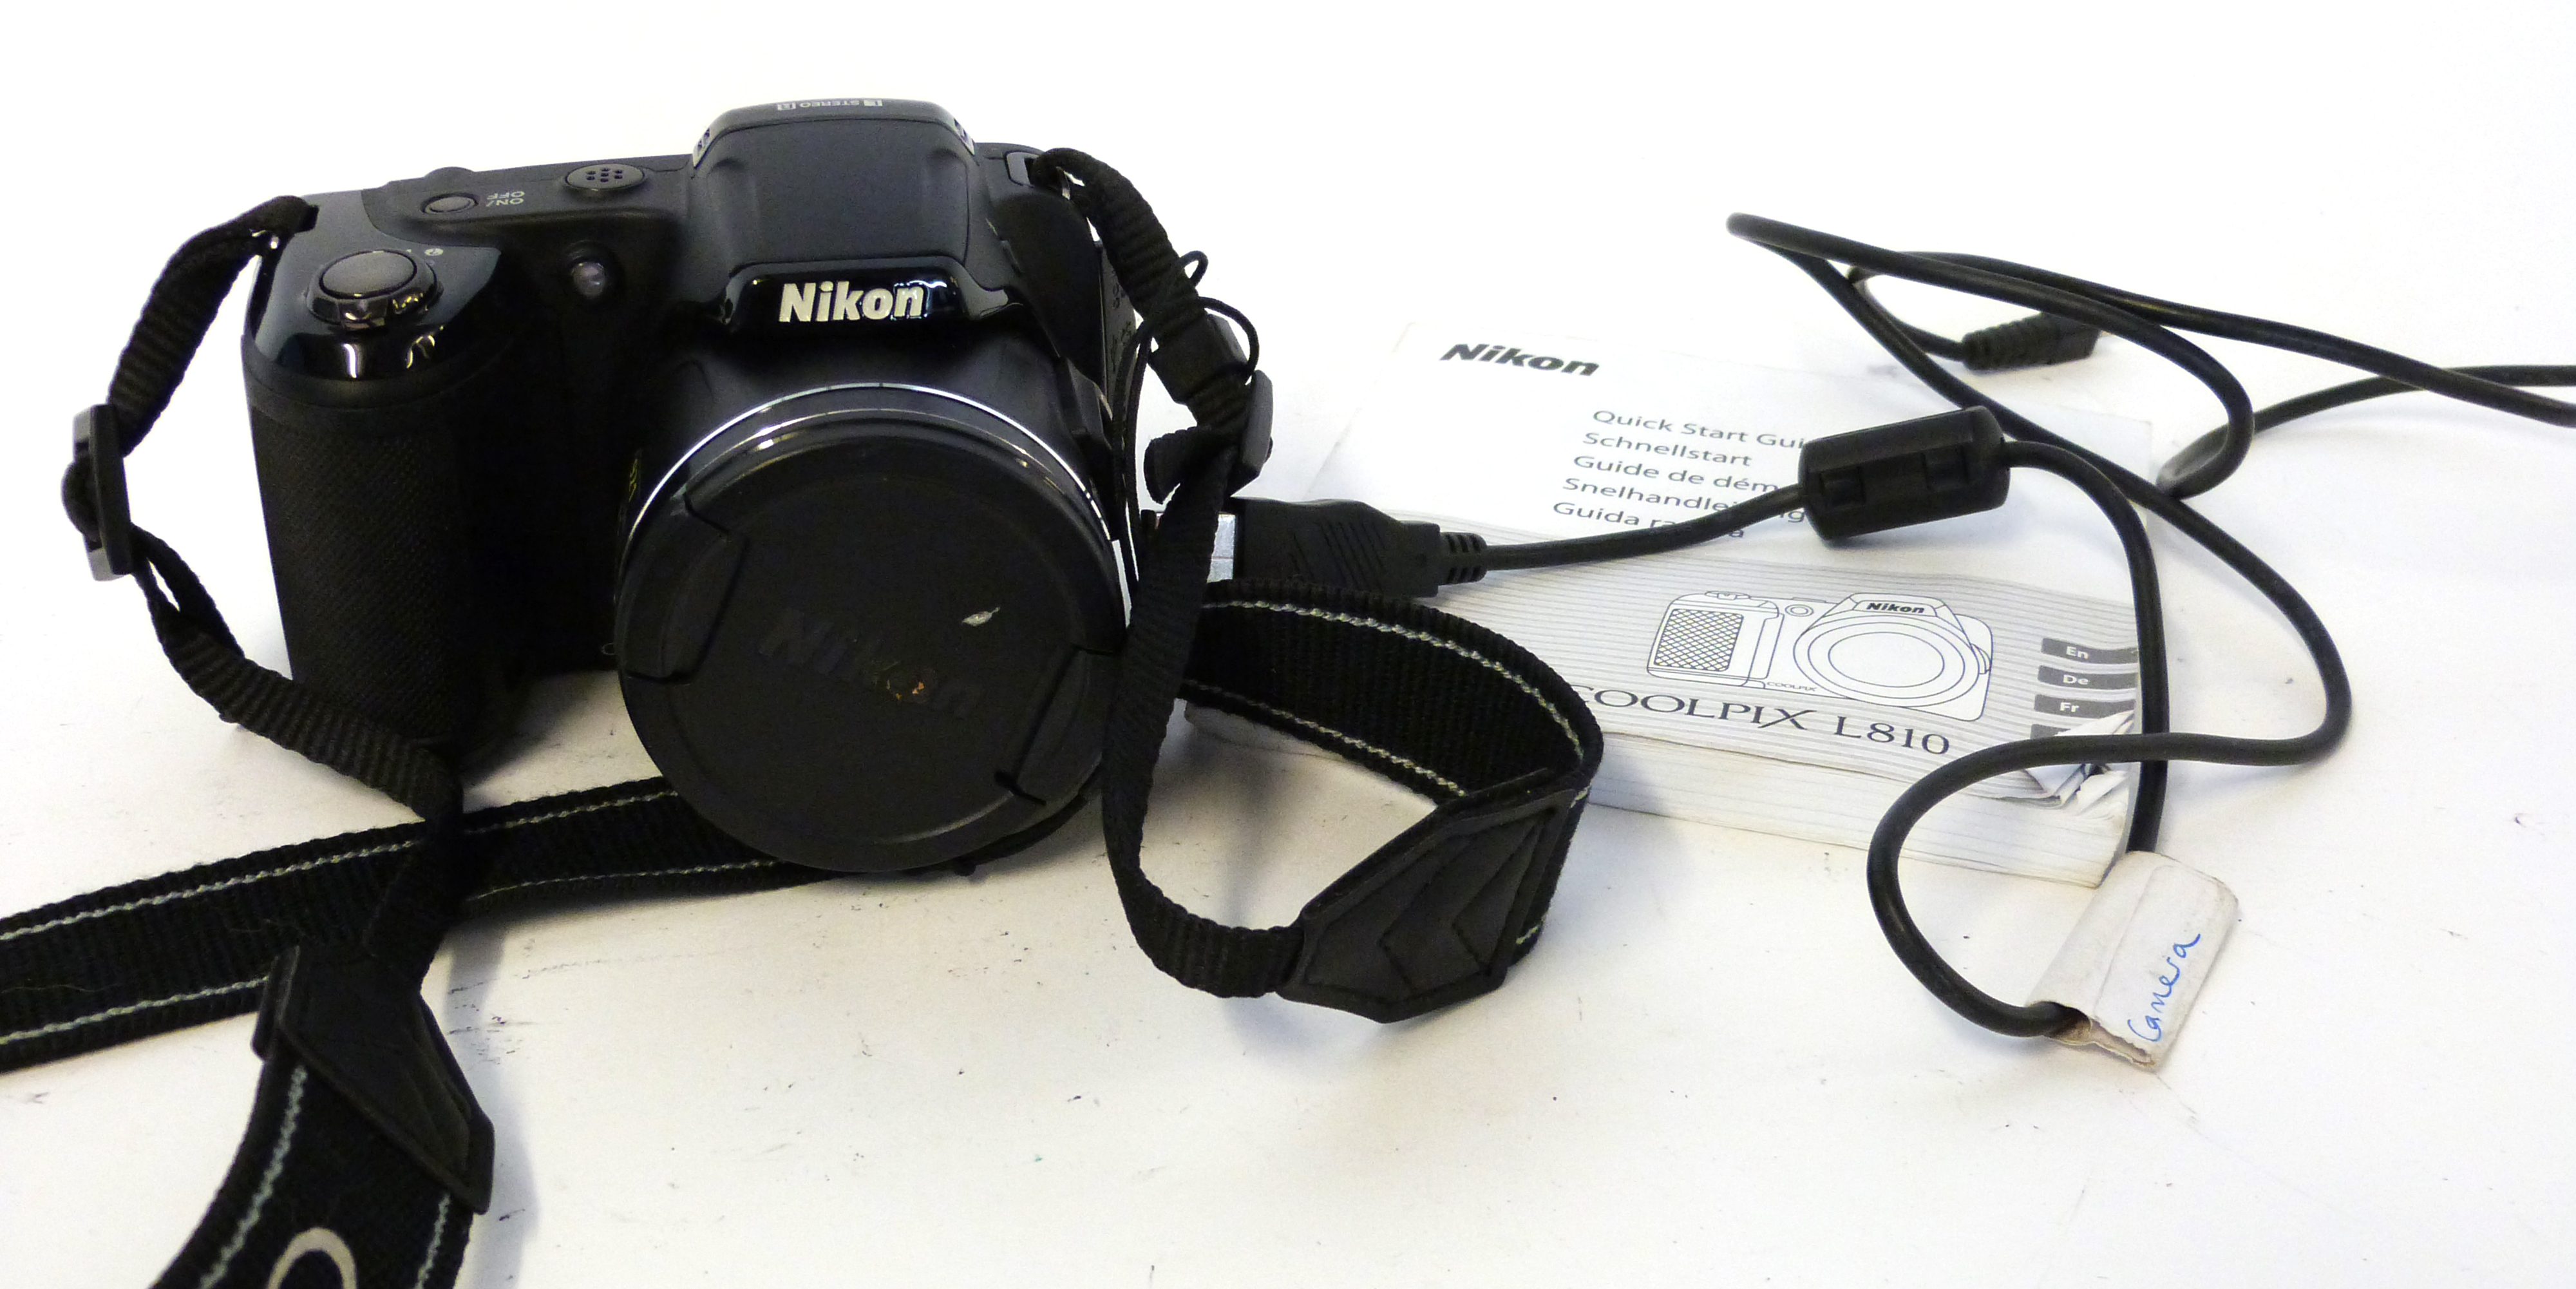 Nikon Coolpix L810 digital camera plus manual and charger - Image 2 of 5